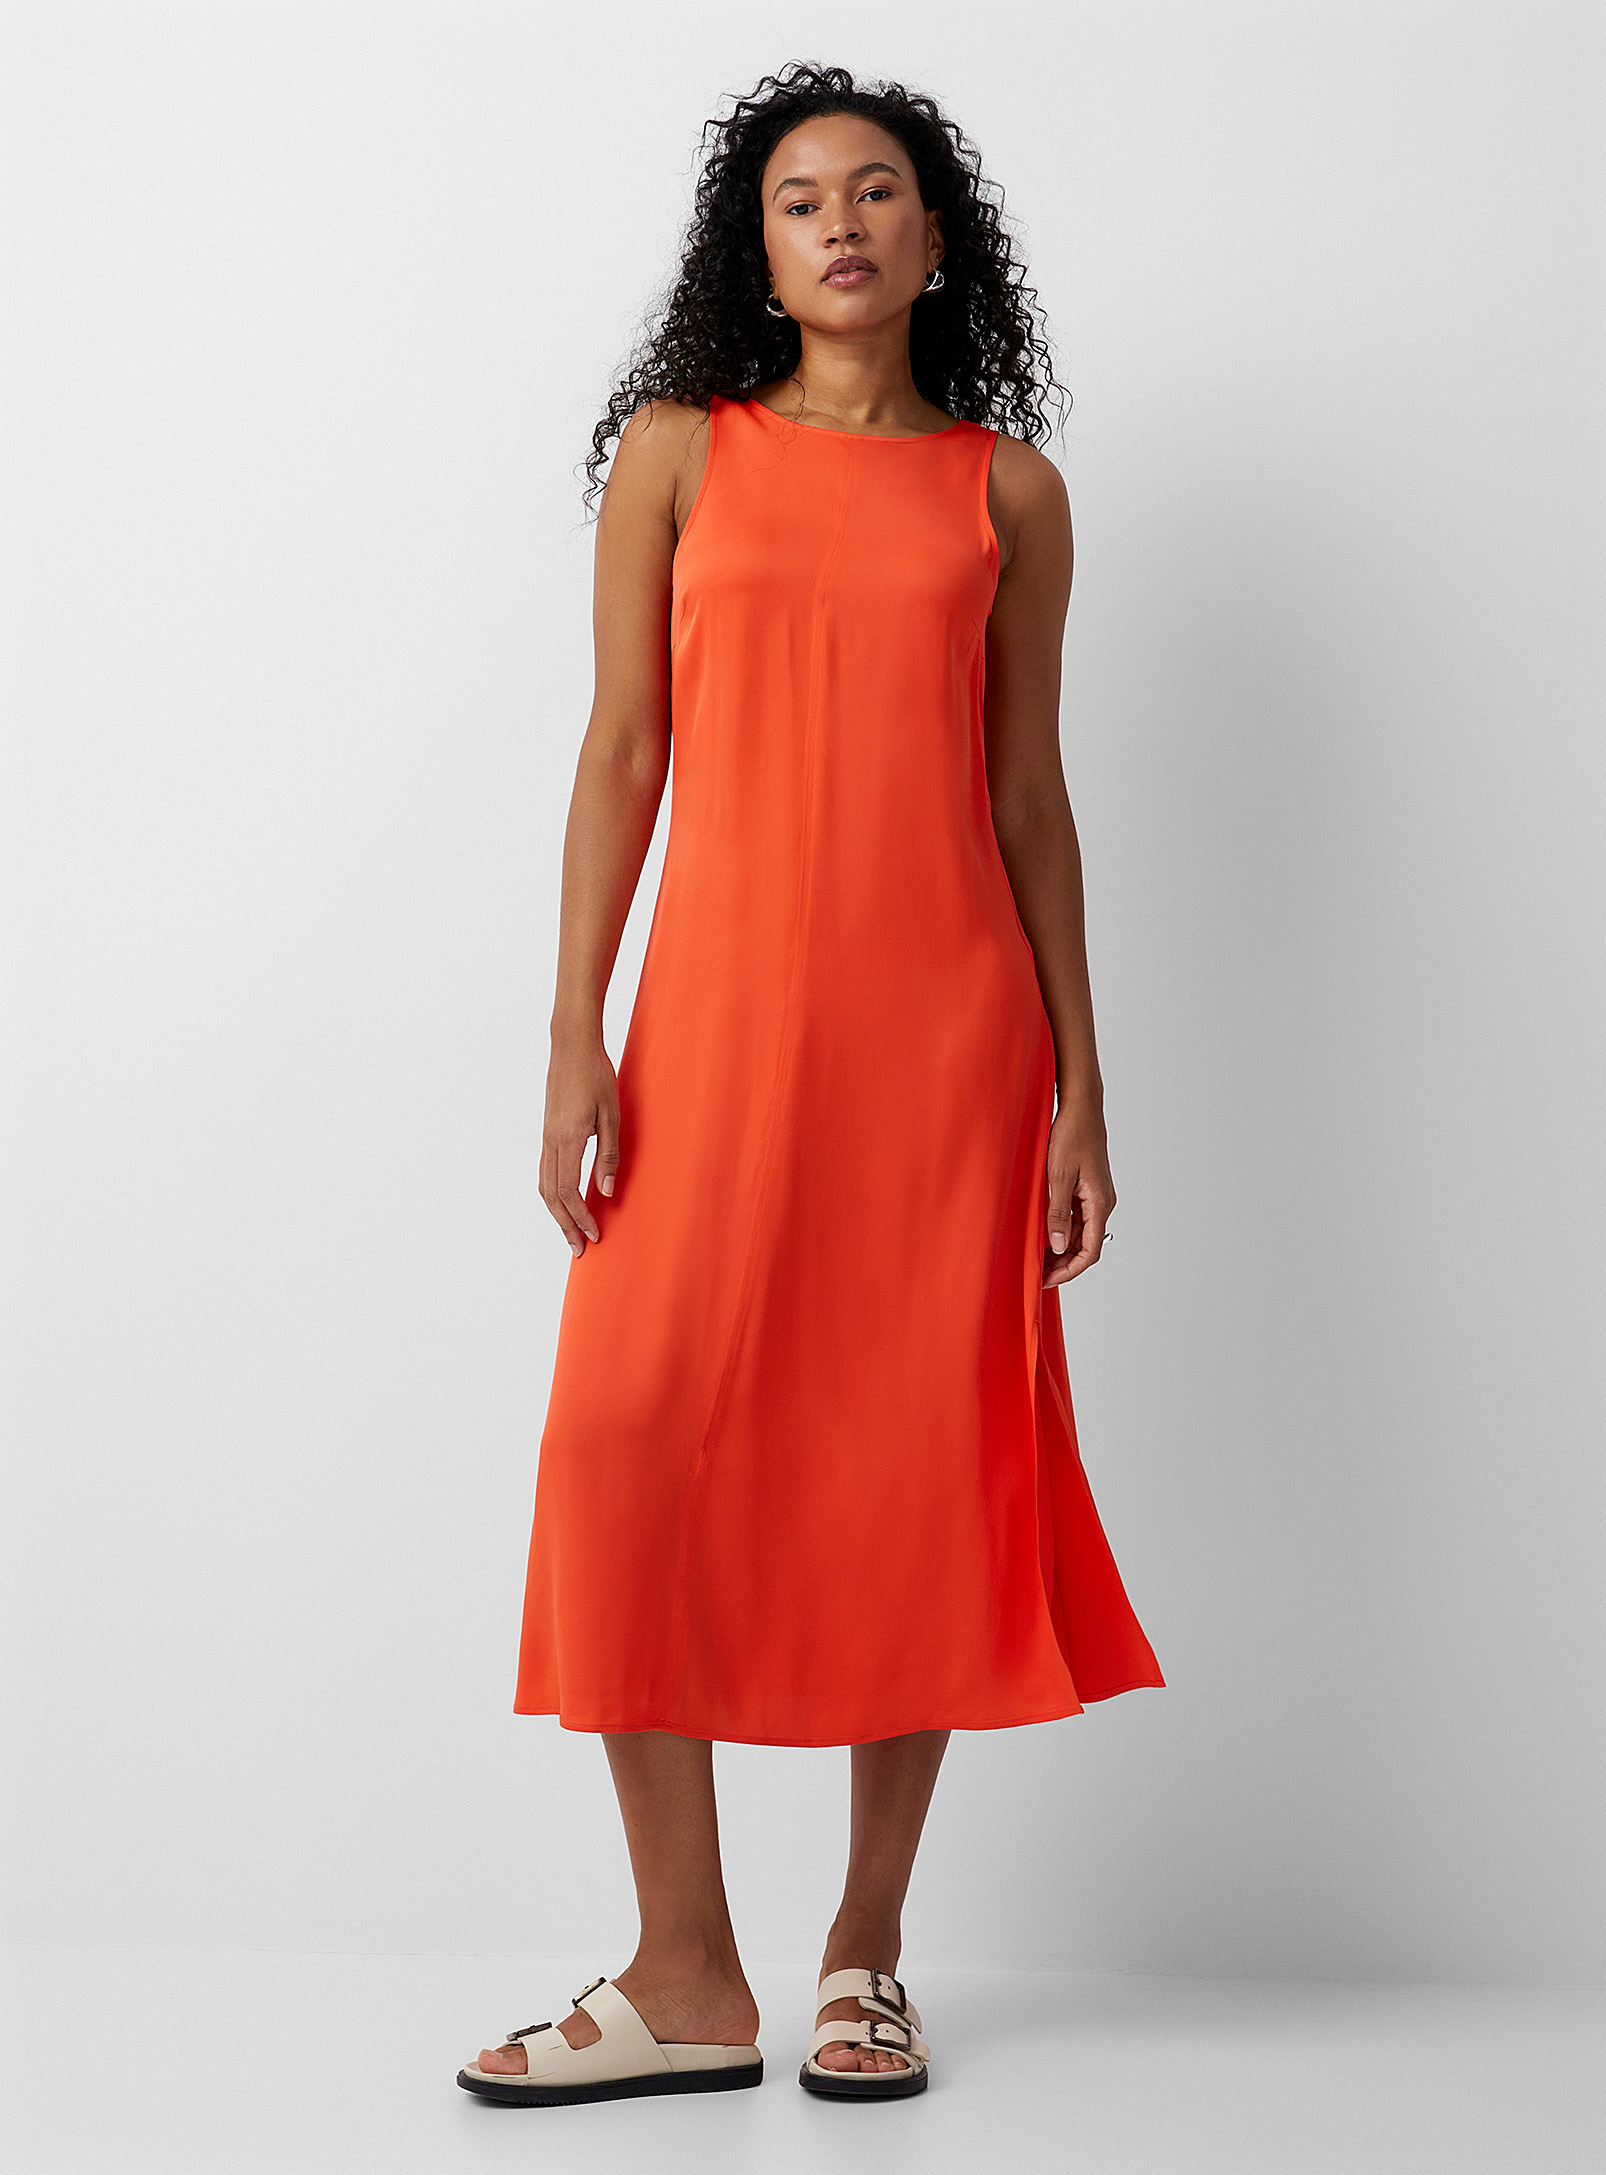 Marc O'Polo - Women's Tangerine satiny slit dress